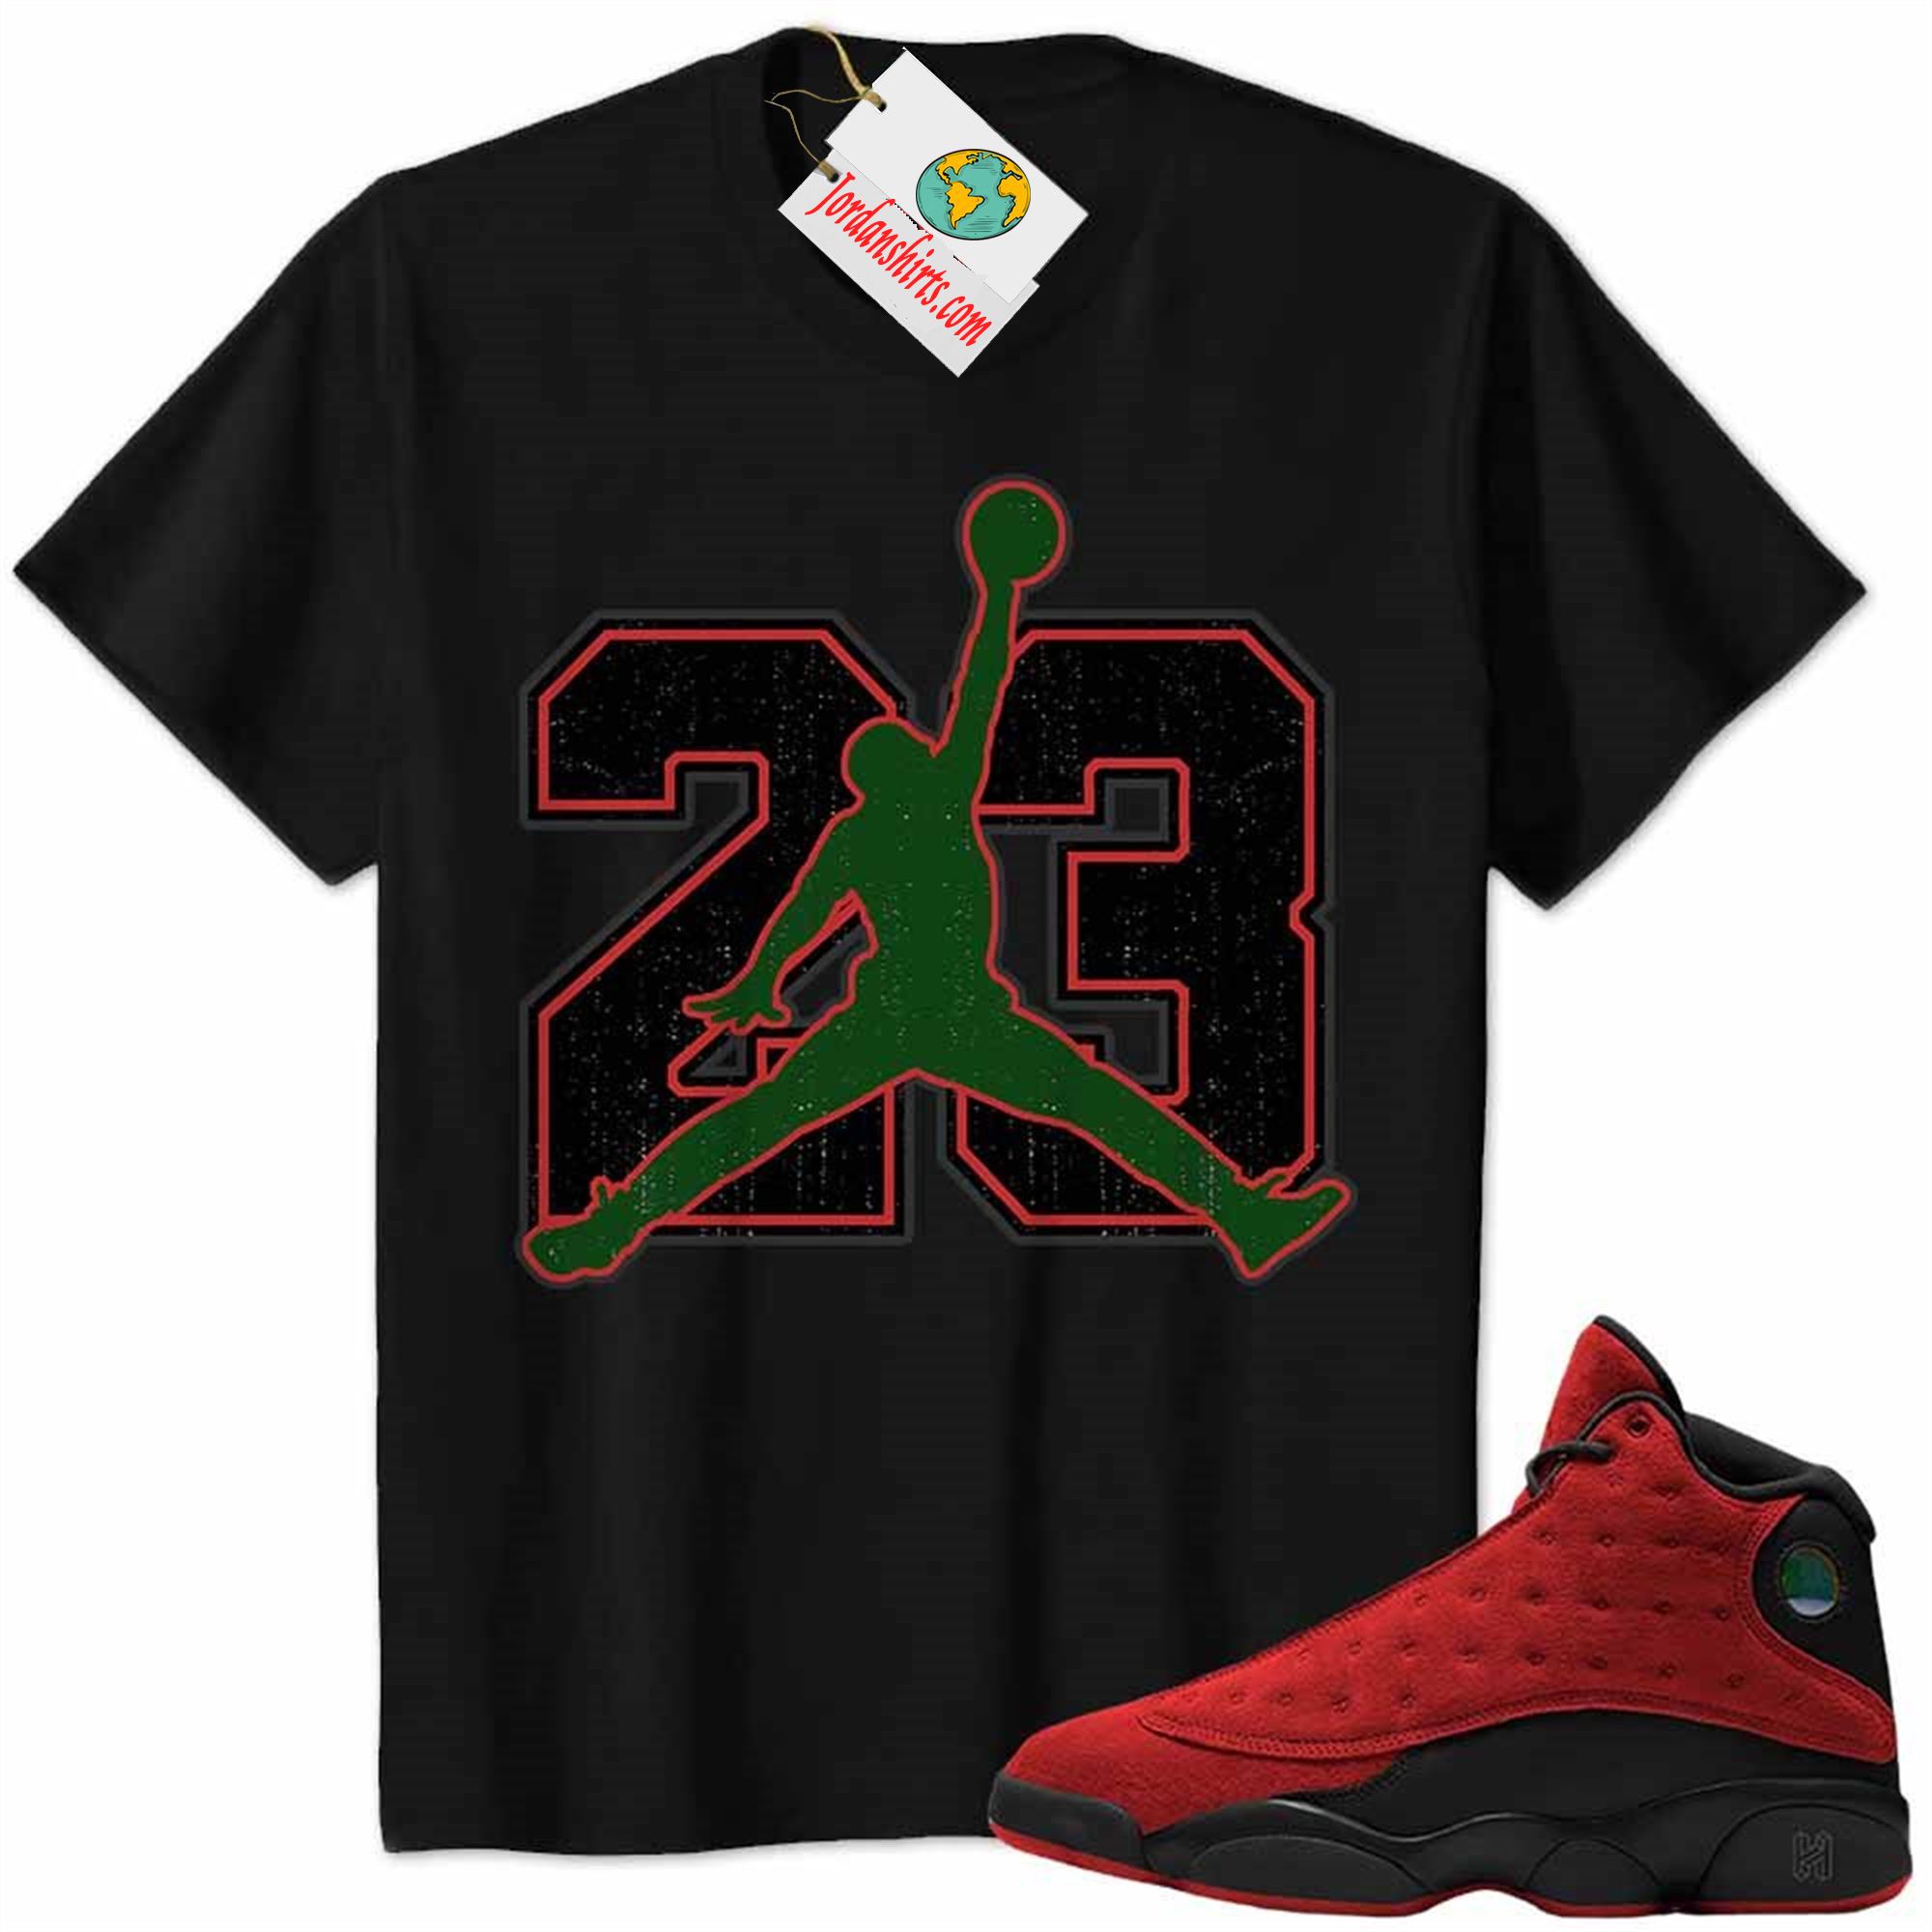 Jordan 13 Shirt, Jordan 13 Reverse Bred Shirt Jumpman No23 Black Plus Size Up To 5xl